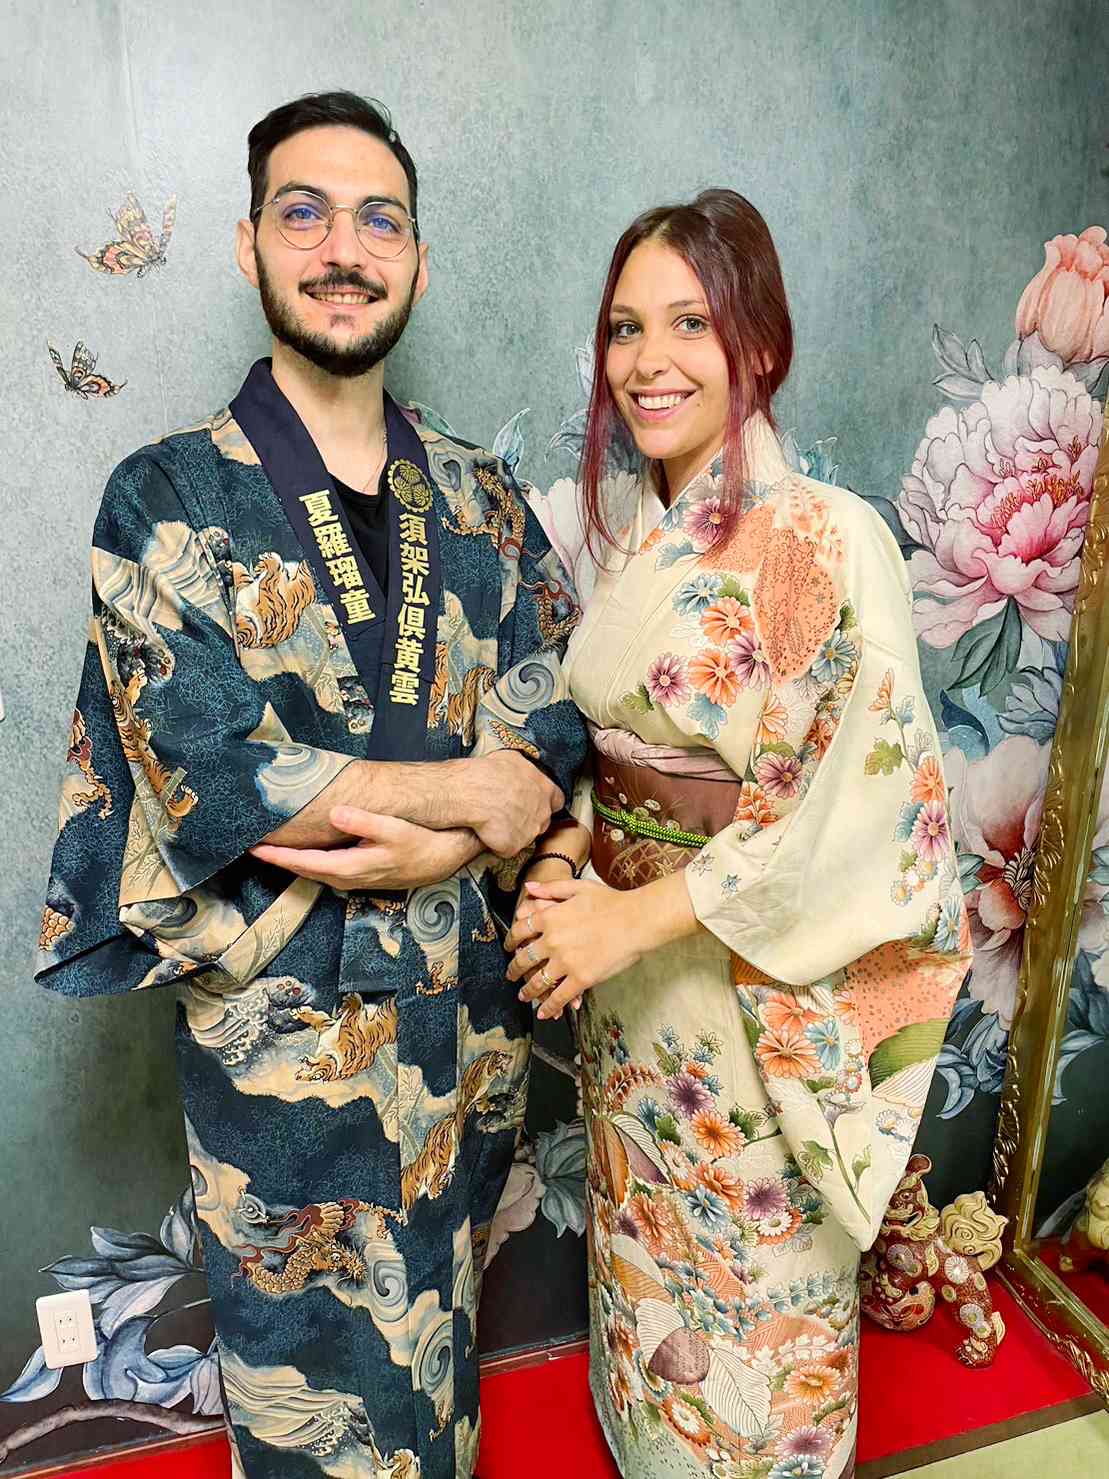 Let us make a kimono（Kimono is a gift)